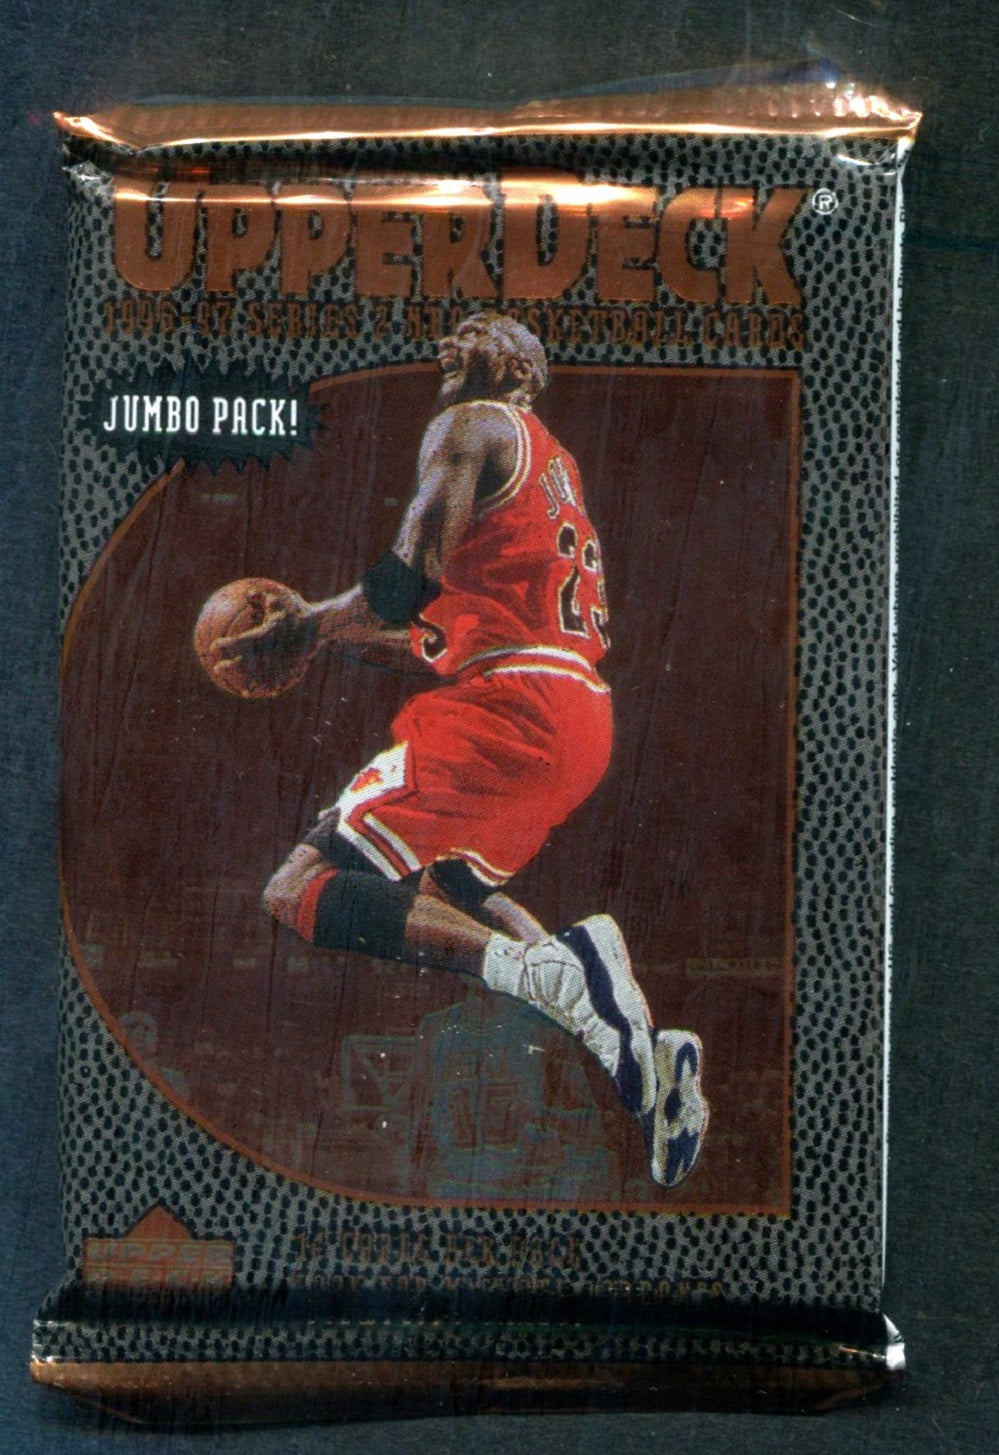 1996/97 Upper Deck Basketball Unopened Series 2 Jumbo Pack (14 Cards)